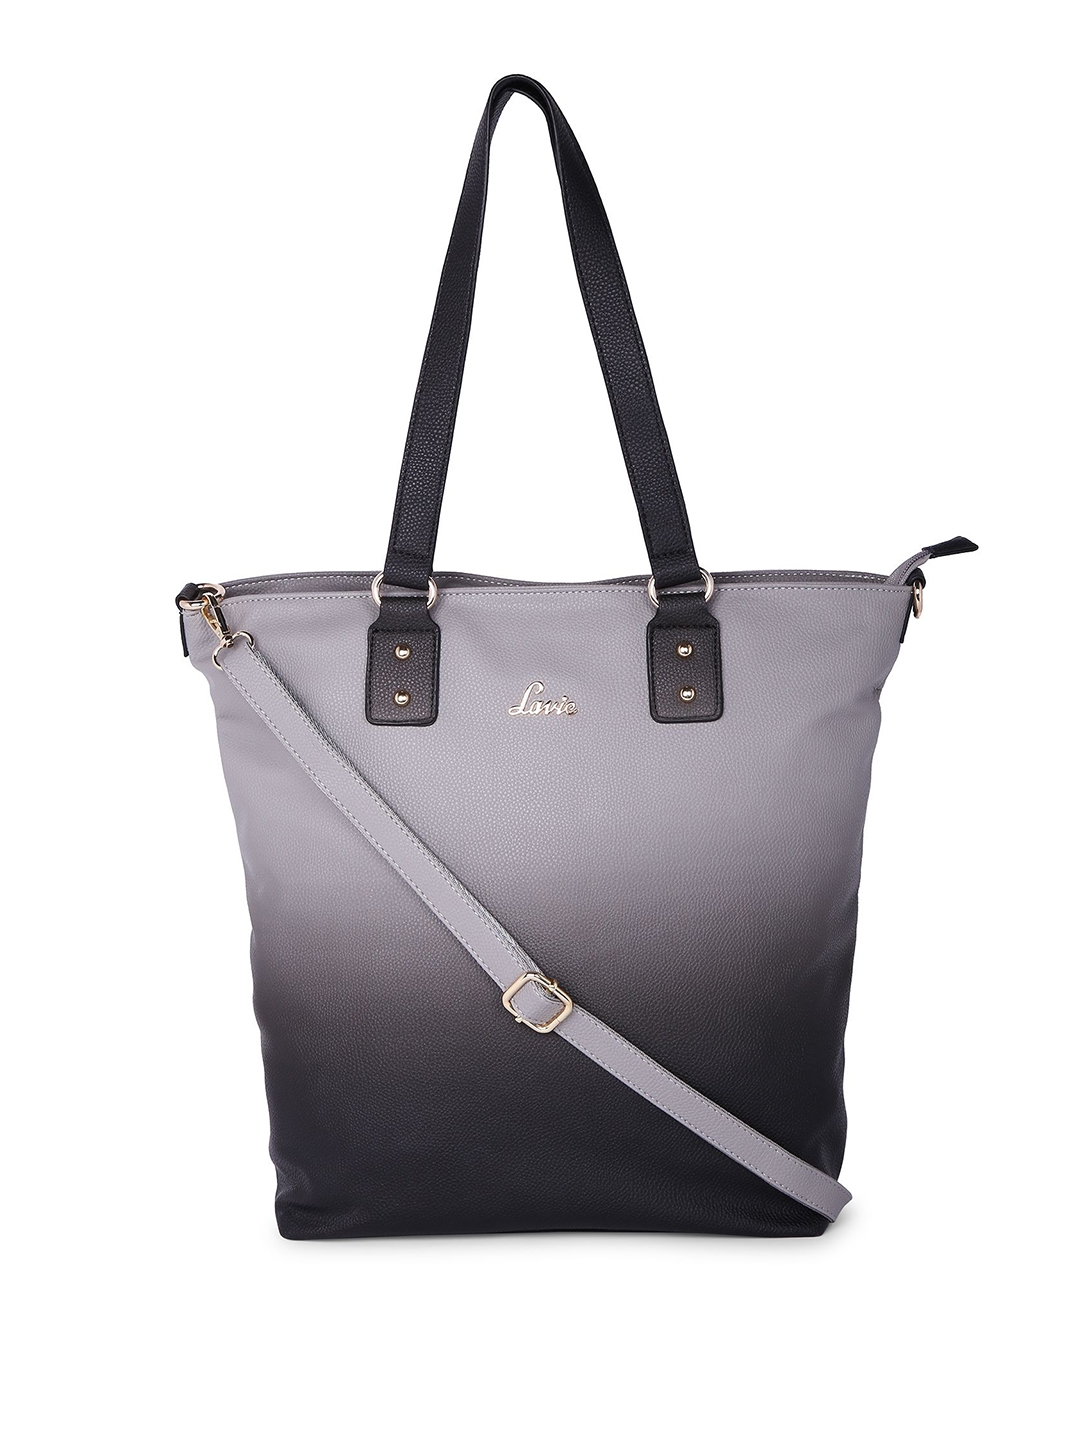 Lavie Grey   Black Colourblocked Tote Bag